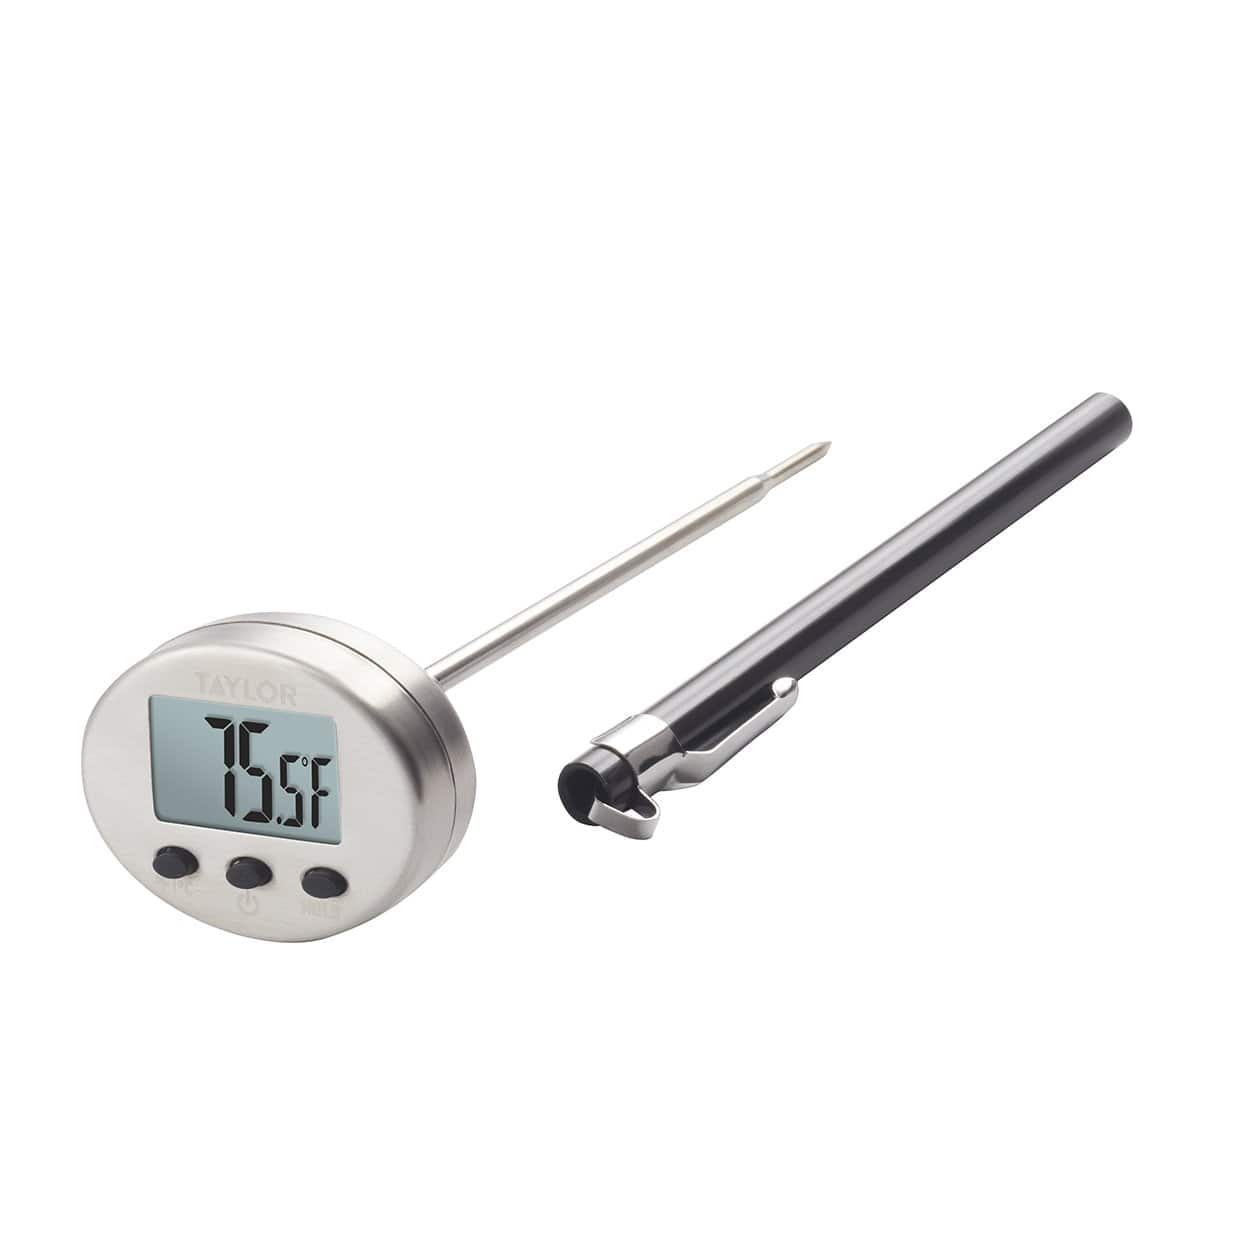 6 Metal Dial Thermometer – Taylor USA